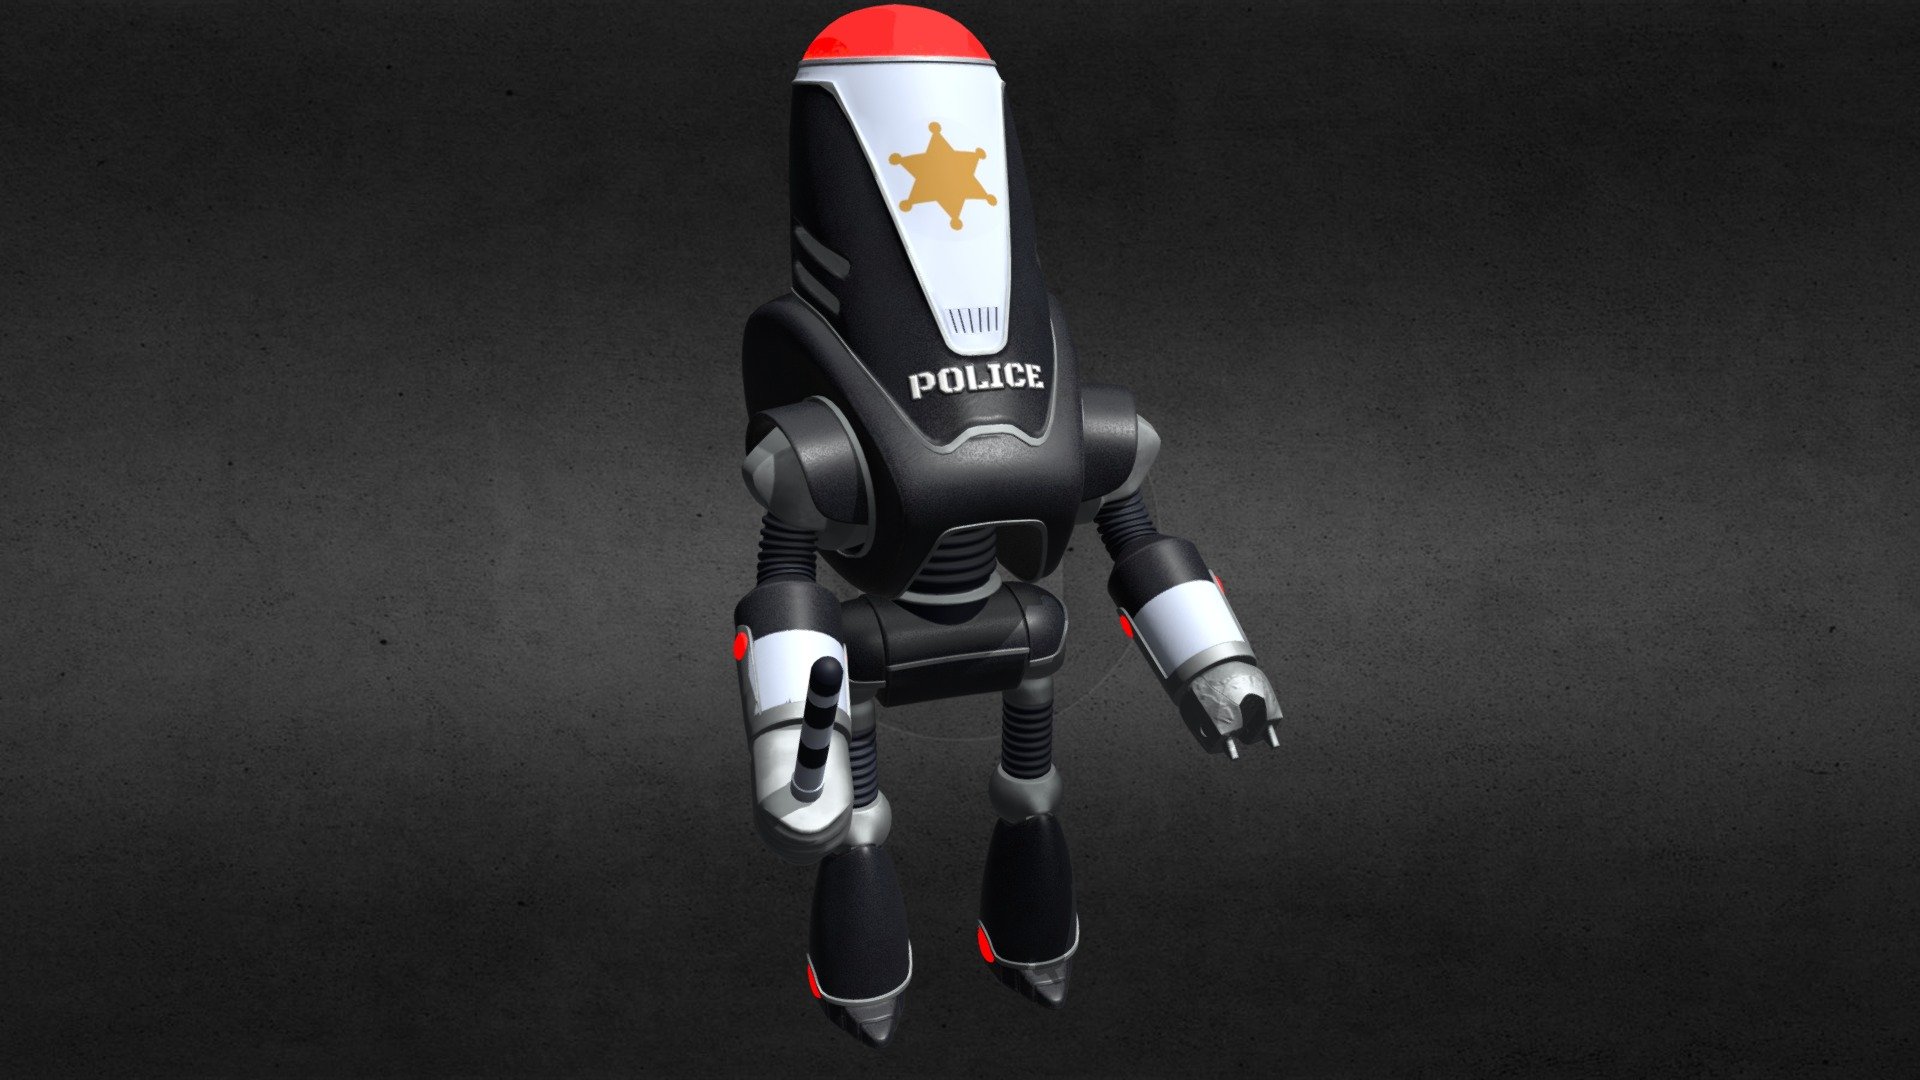 Protectron police
3ds max
substance painter - Protectron police - 3D model by FAISAL AIYACH (@Faisalaiyach) 3d model